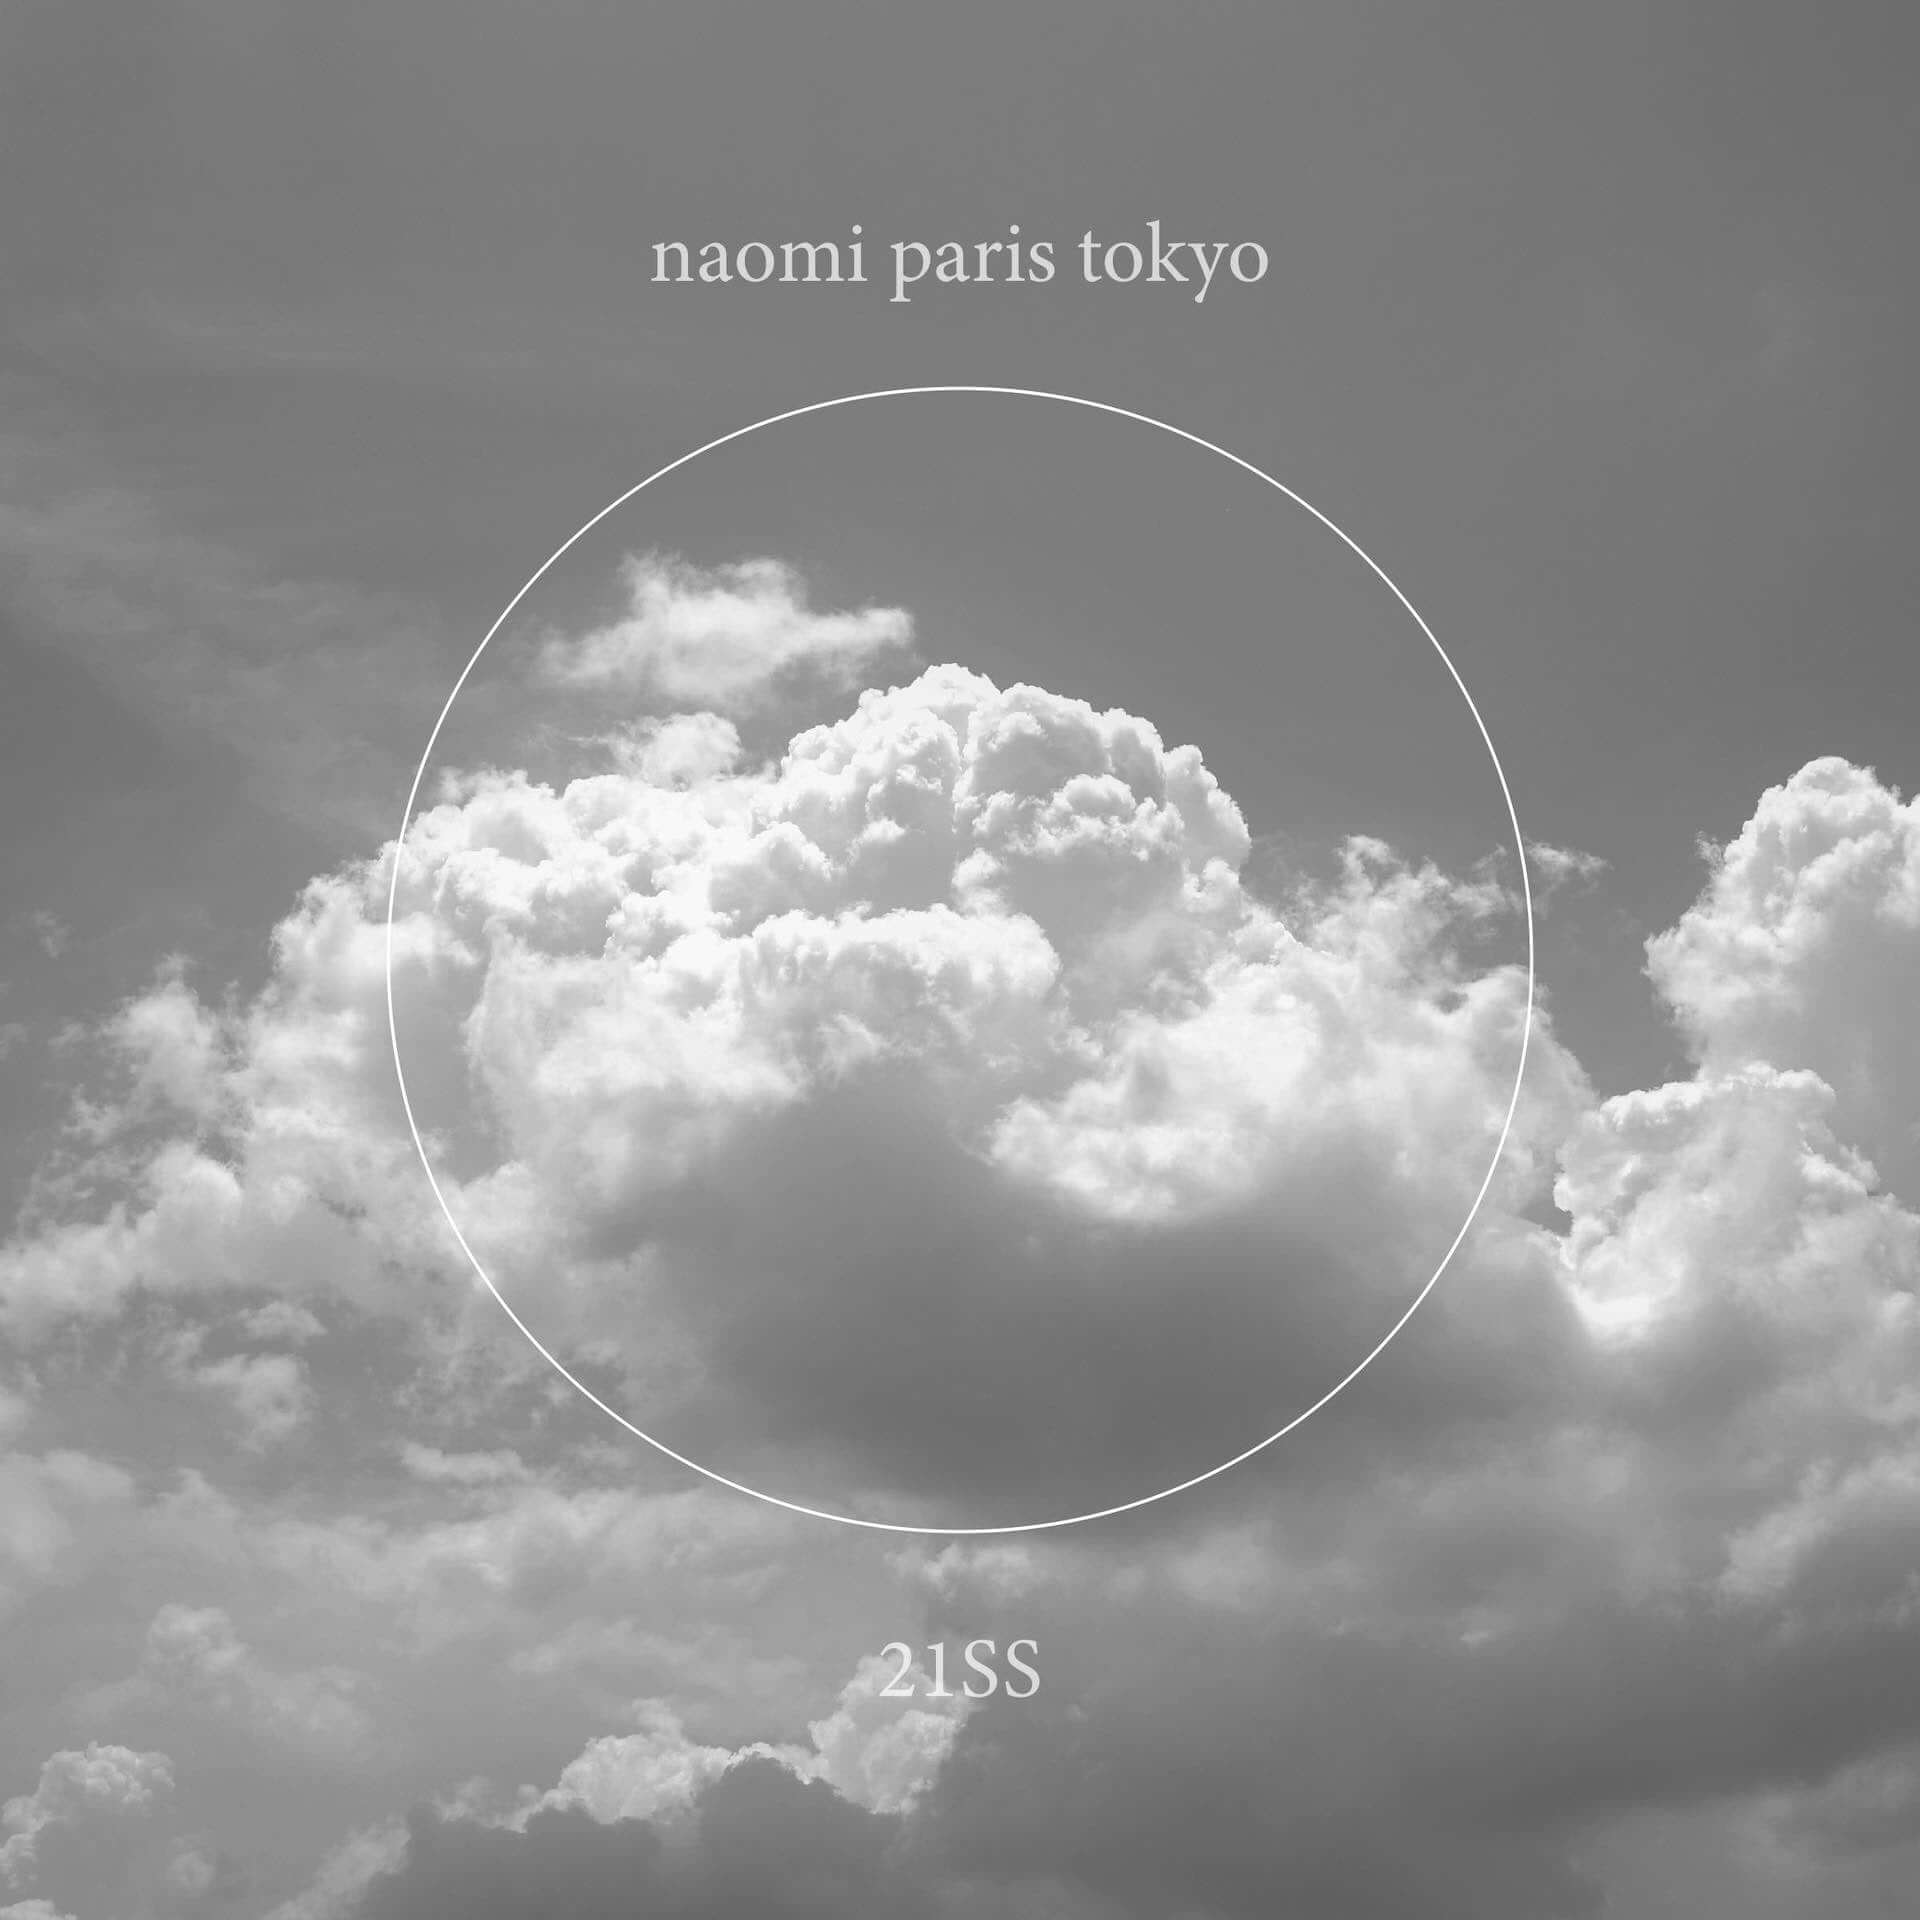 jan and naomiのnaomi paris tokyoによる1st EP『21SS』より先行シングル“Tokyo”がリリース！本人コメントも到着 music201210_naomi-paris-tokyo_2-1920x1920